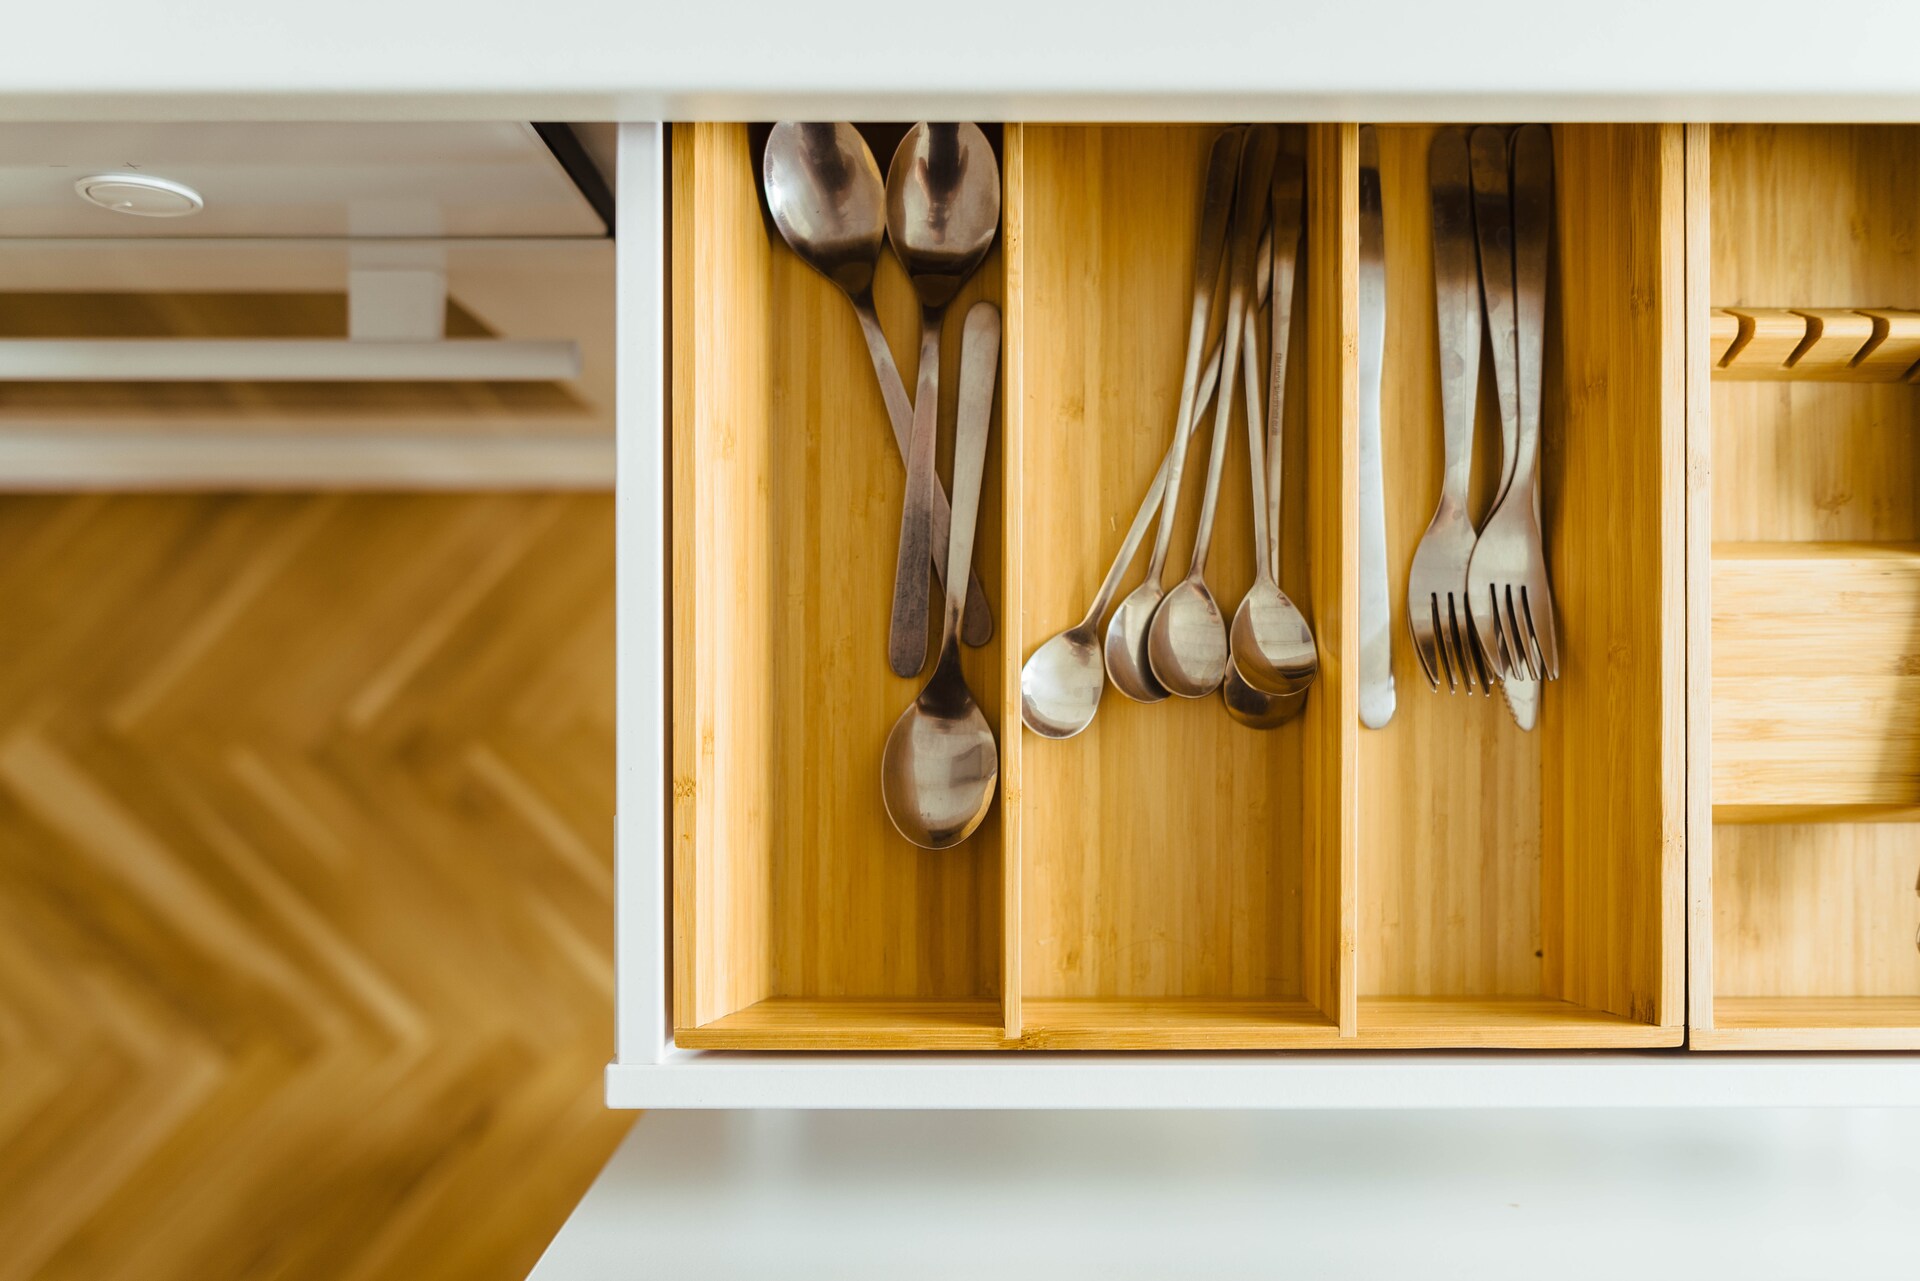 utensils in a drawer